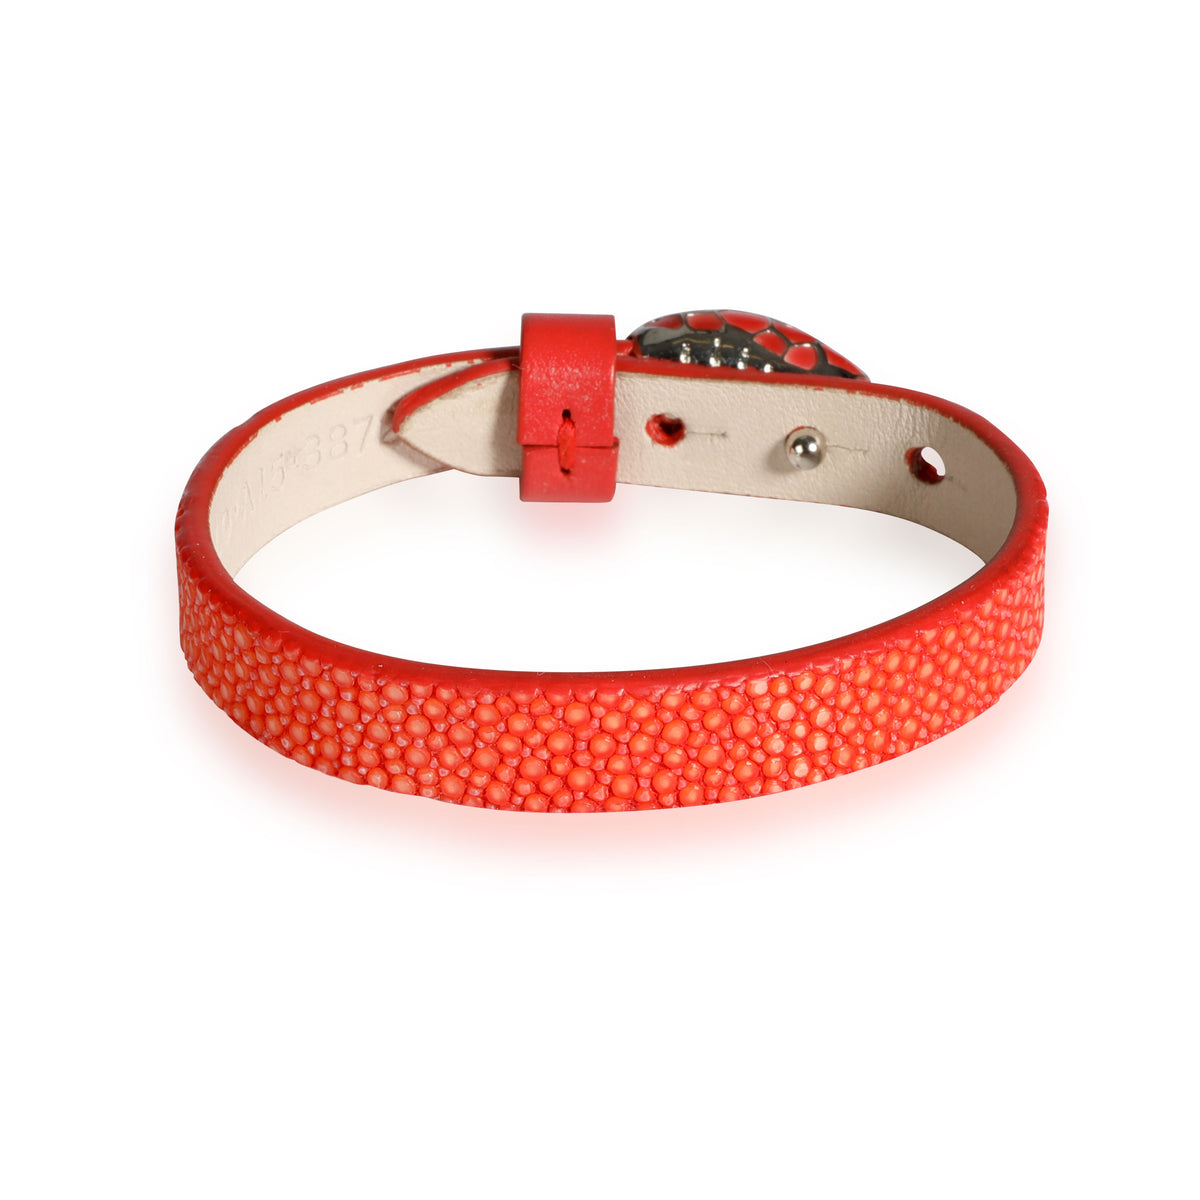 Bulgari Serpentini Forever Bracelet in Red Leather